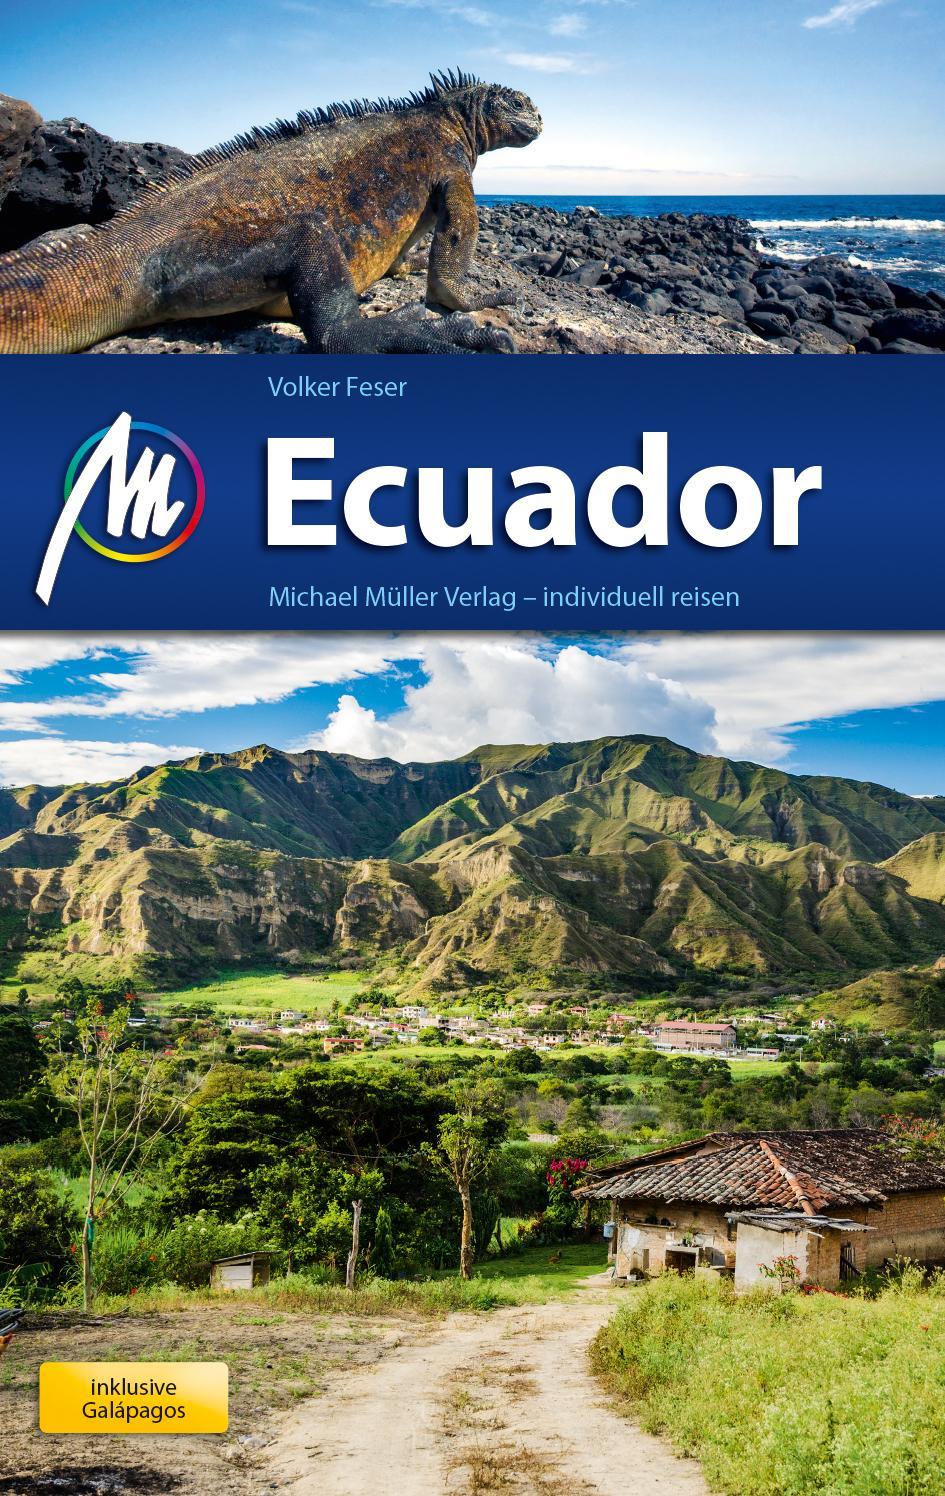 Ecuador Reiseführer Michael Müller Verlag - Individuell reisen mit vielen p ... - Volker Feser